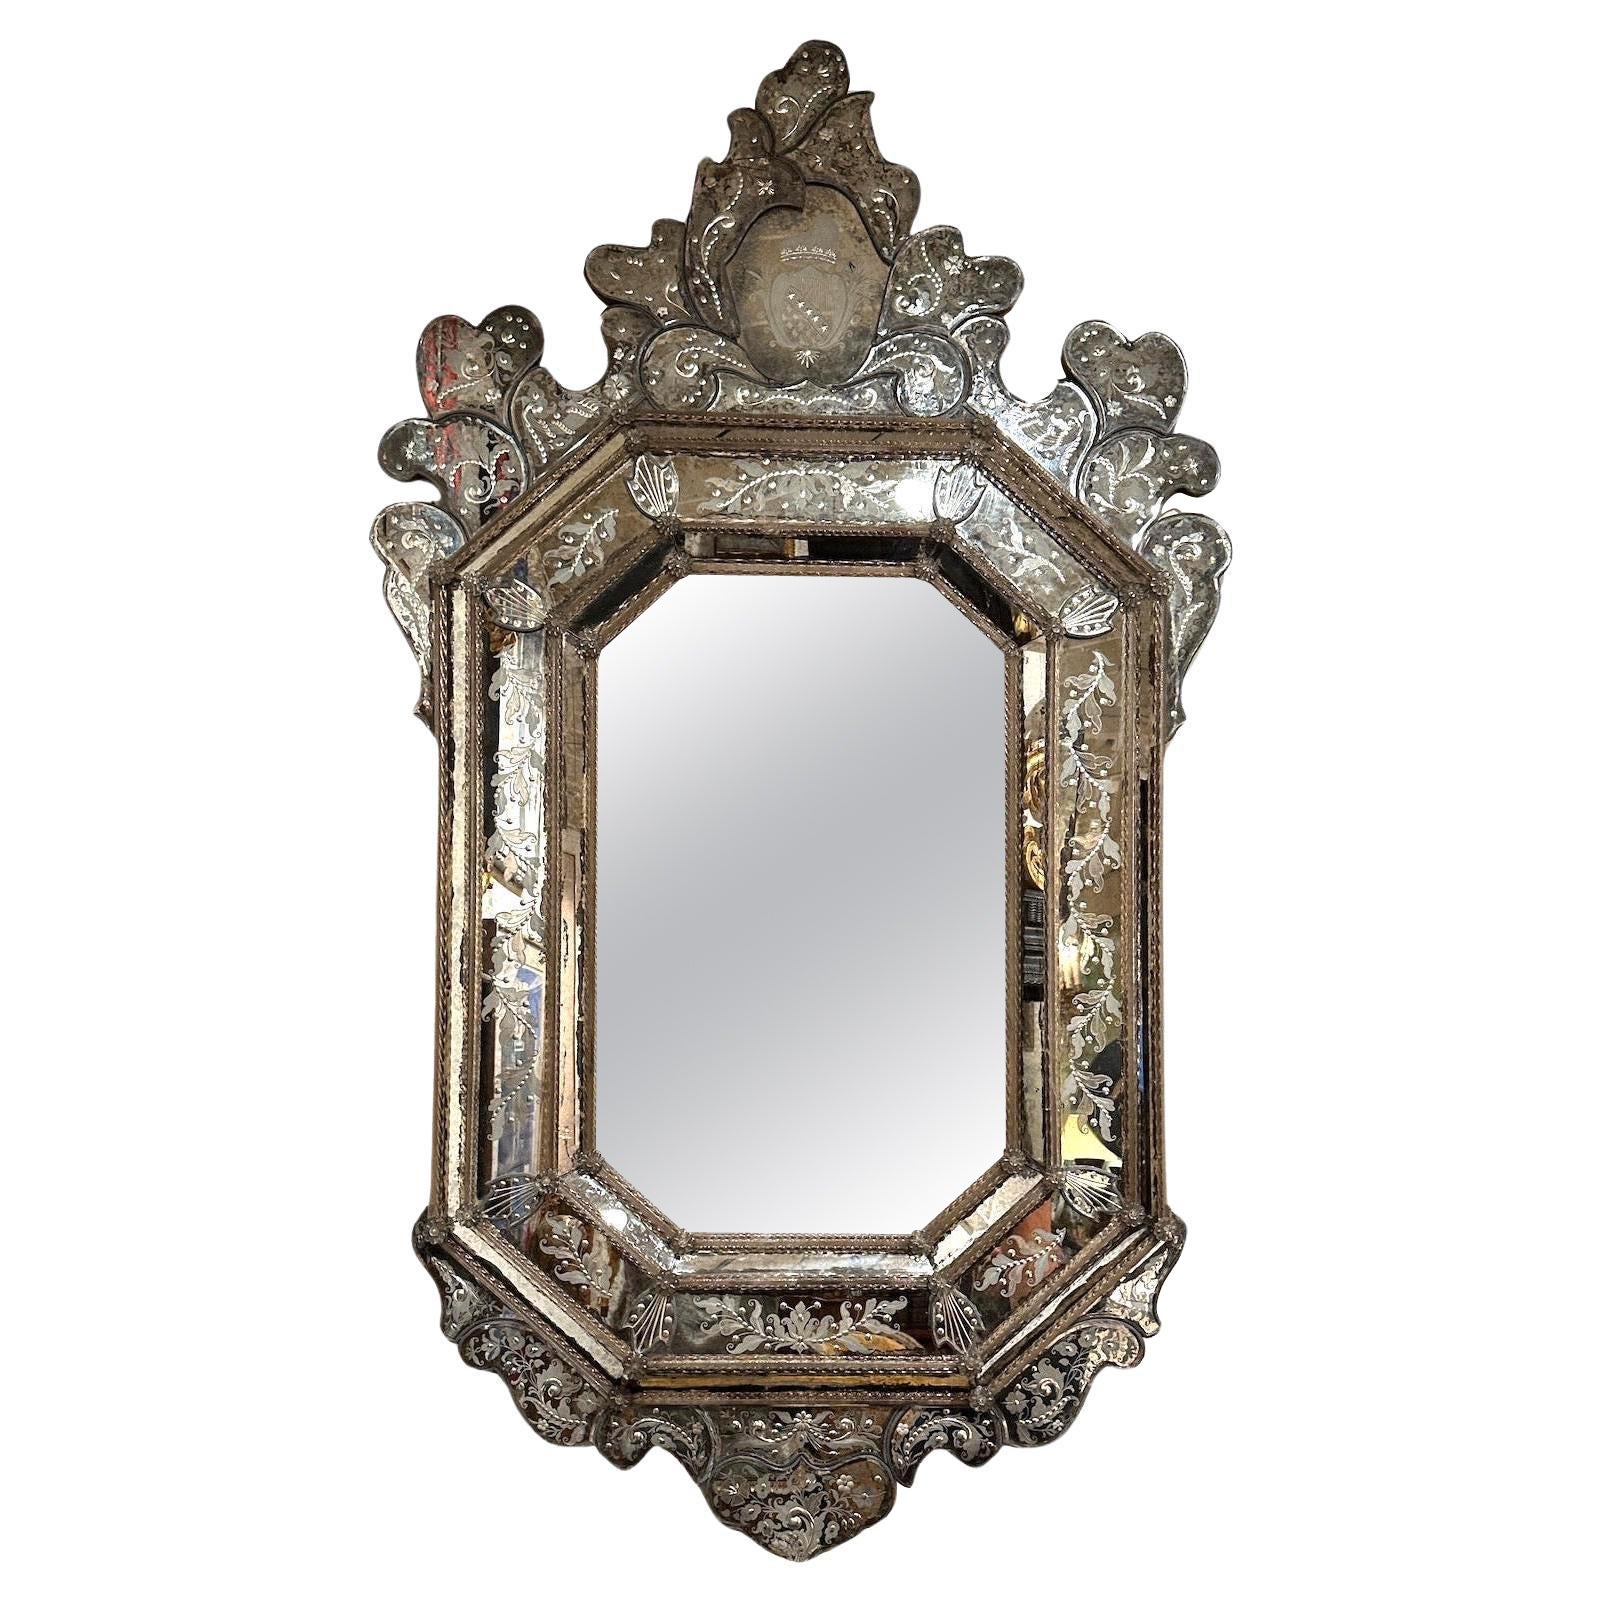 How do I clean Venetian mirrors?